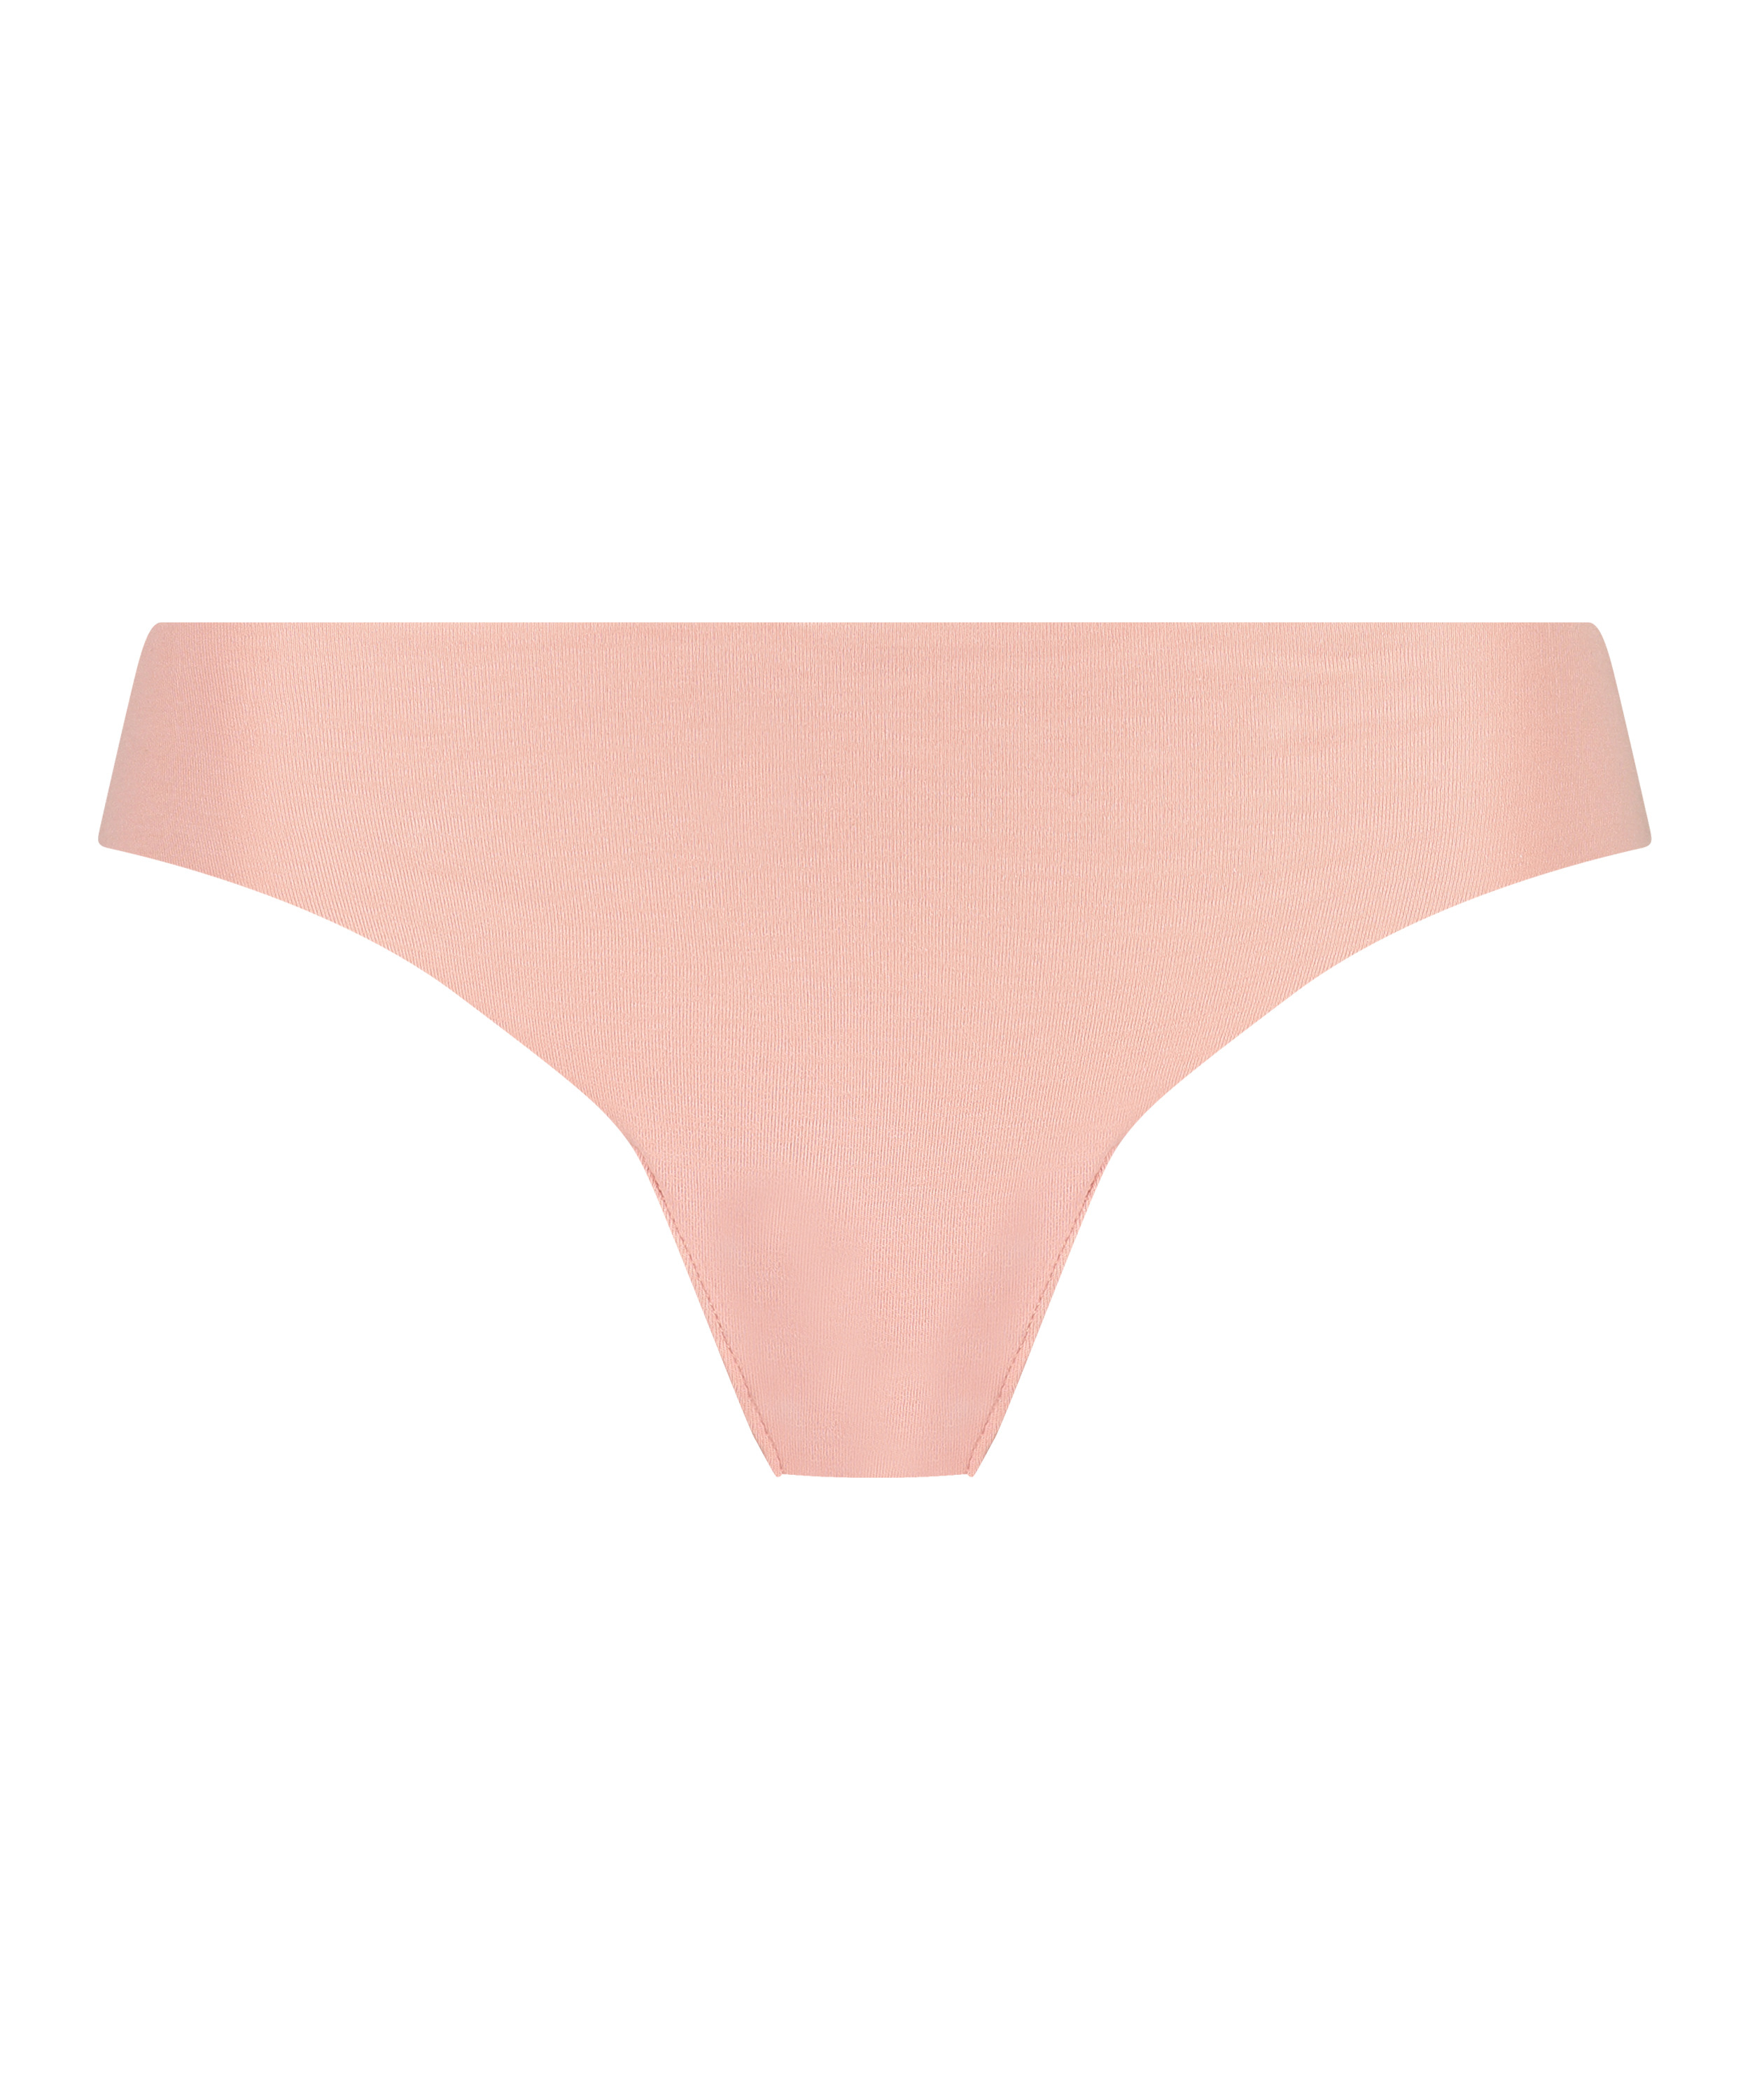 Invisible cotton thong, Pink, main